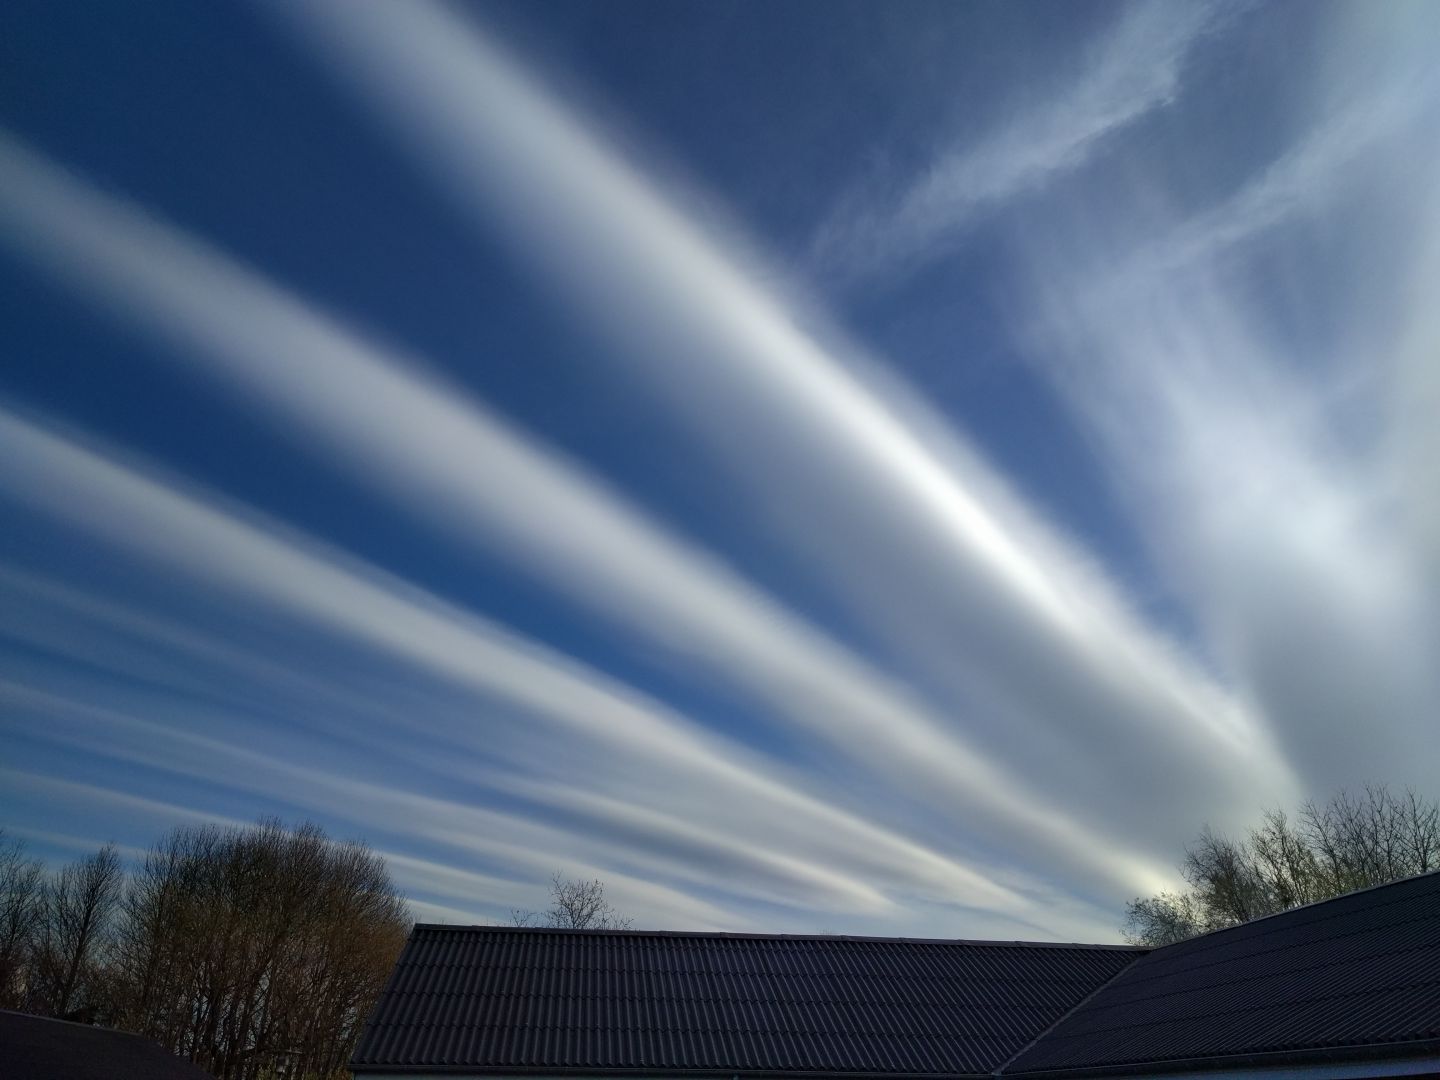 http://strangesounds.org/wp-content/uploads/2015/12/mysterious-clouds-Kolding-Denmark-2.jpg